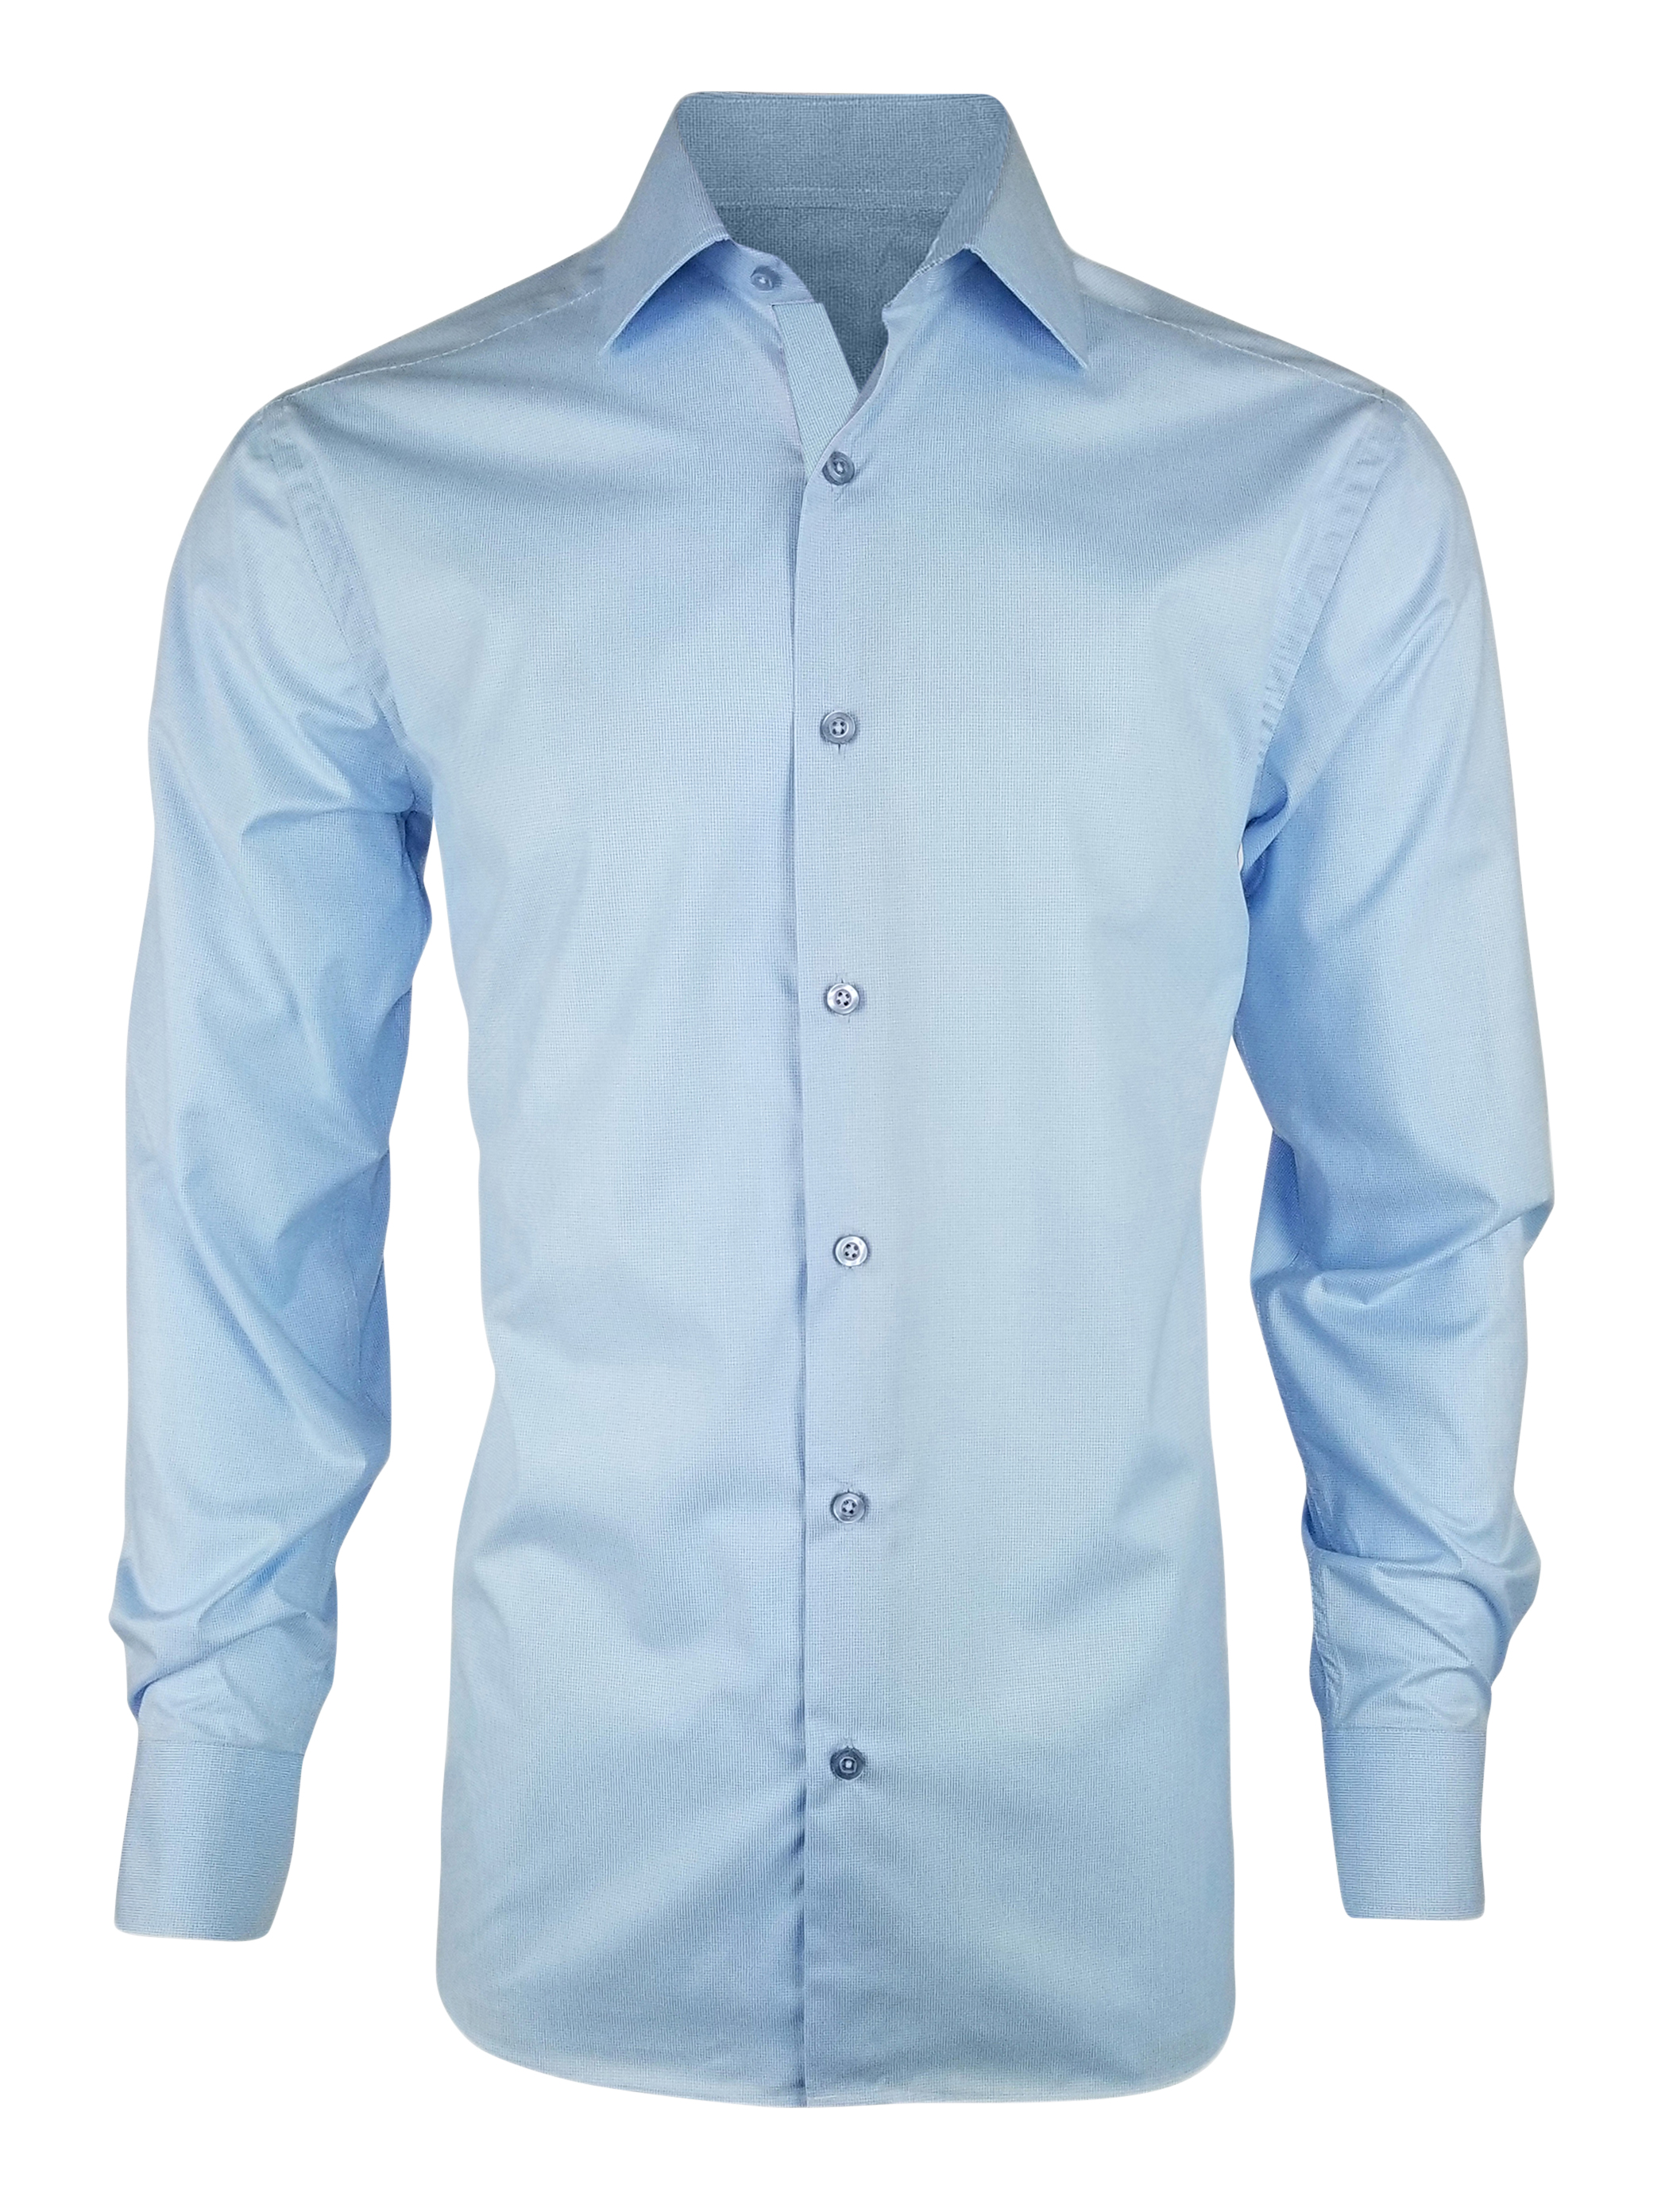 Men's Paris Shirt - Light Blue Micro Check Long Sleeve - Uniform Edit